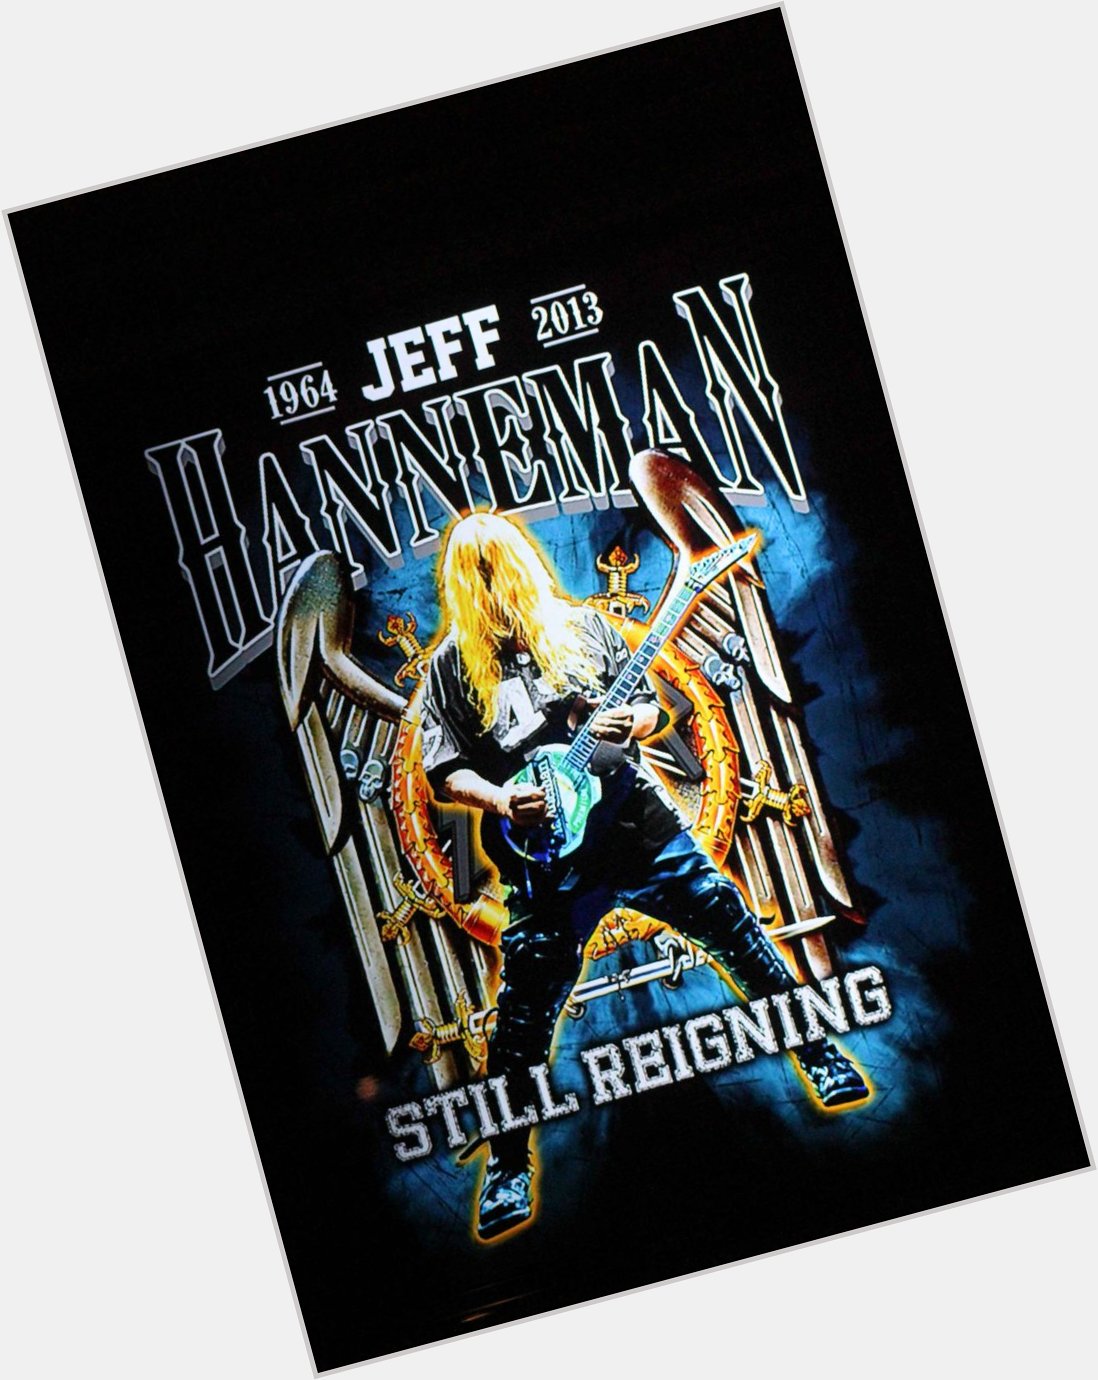 Happy Birthday to the best metal guitarist, the late Jeff Hanneman.  